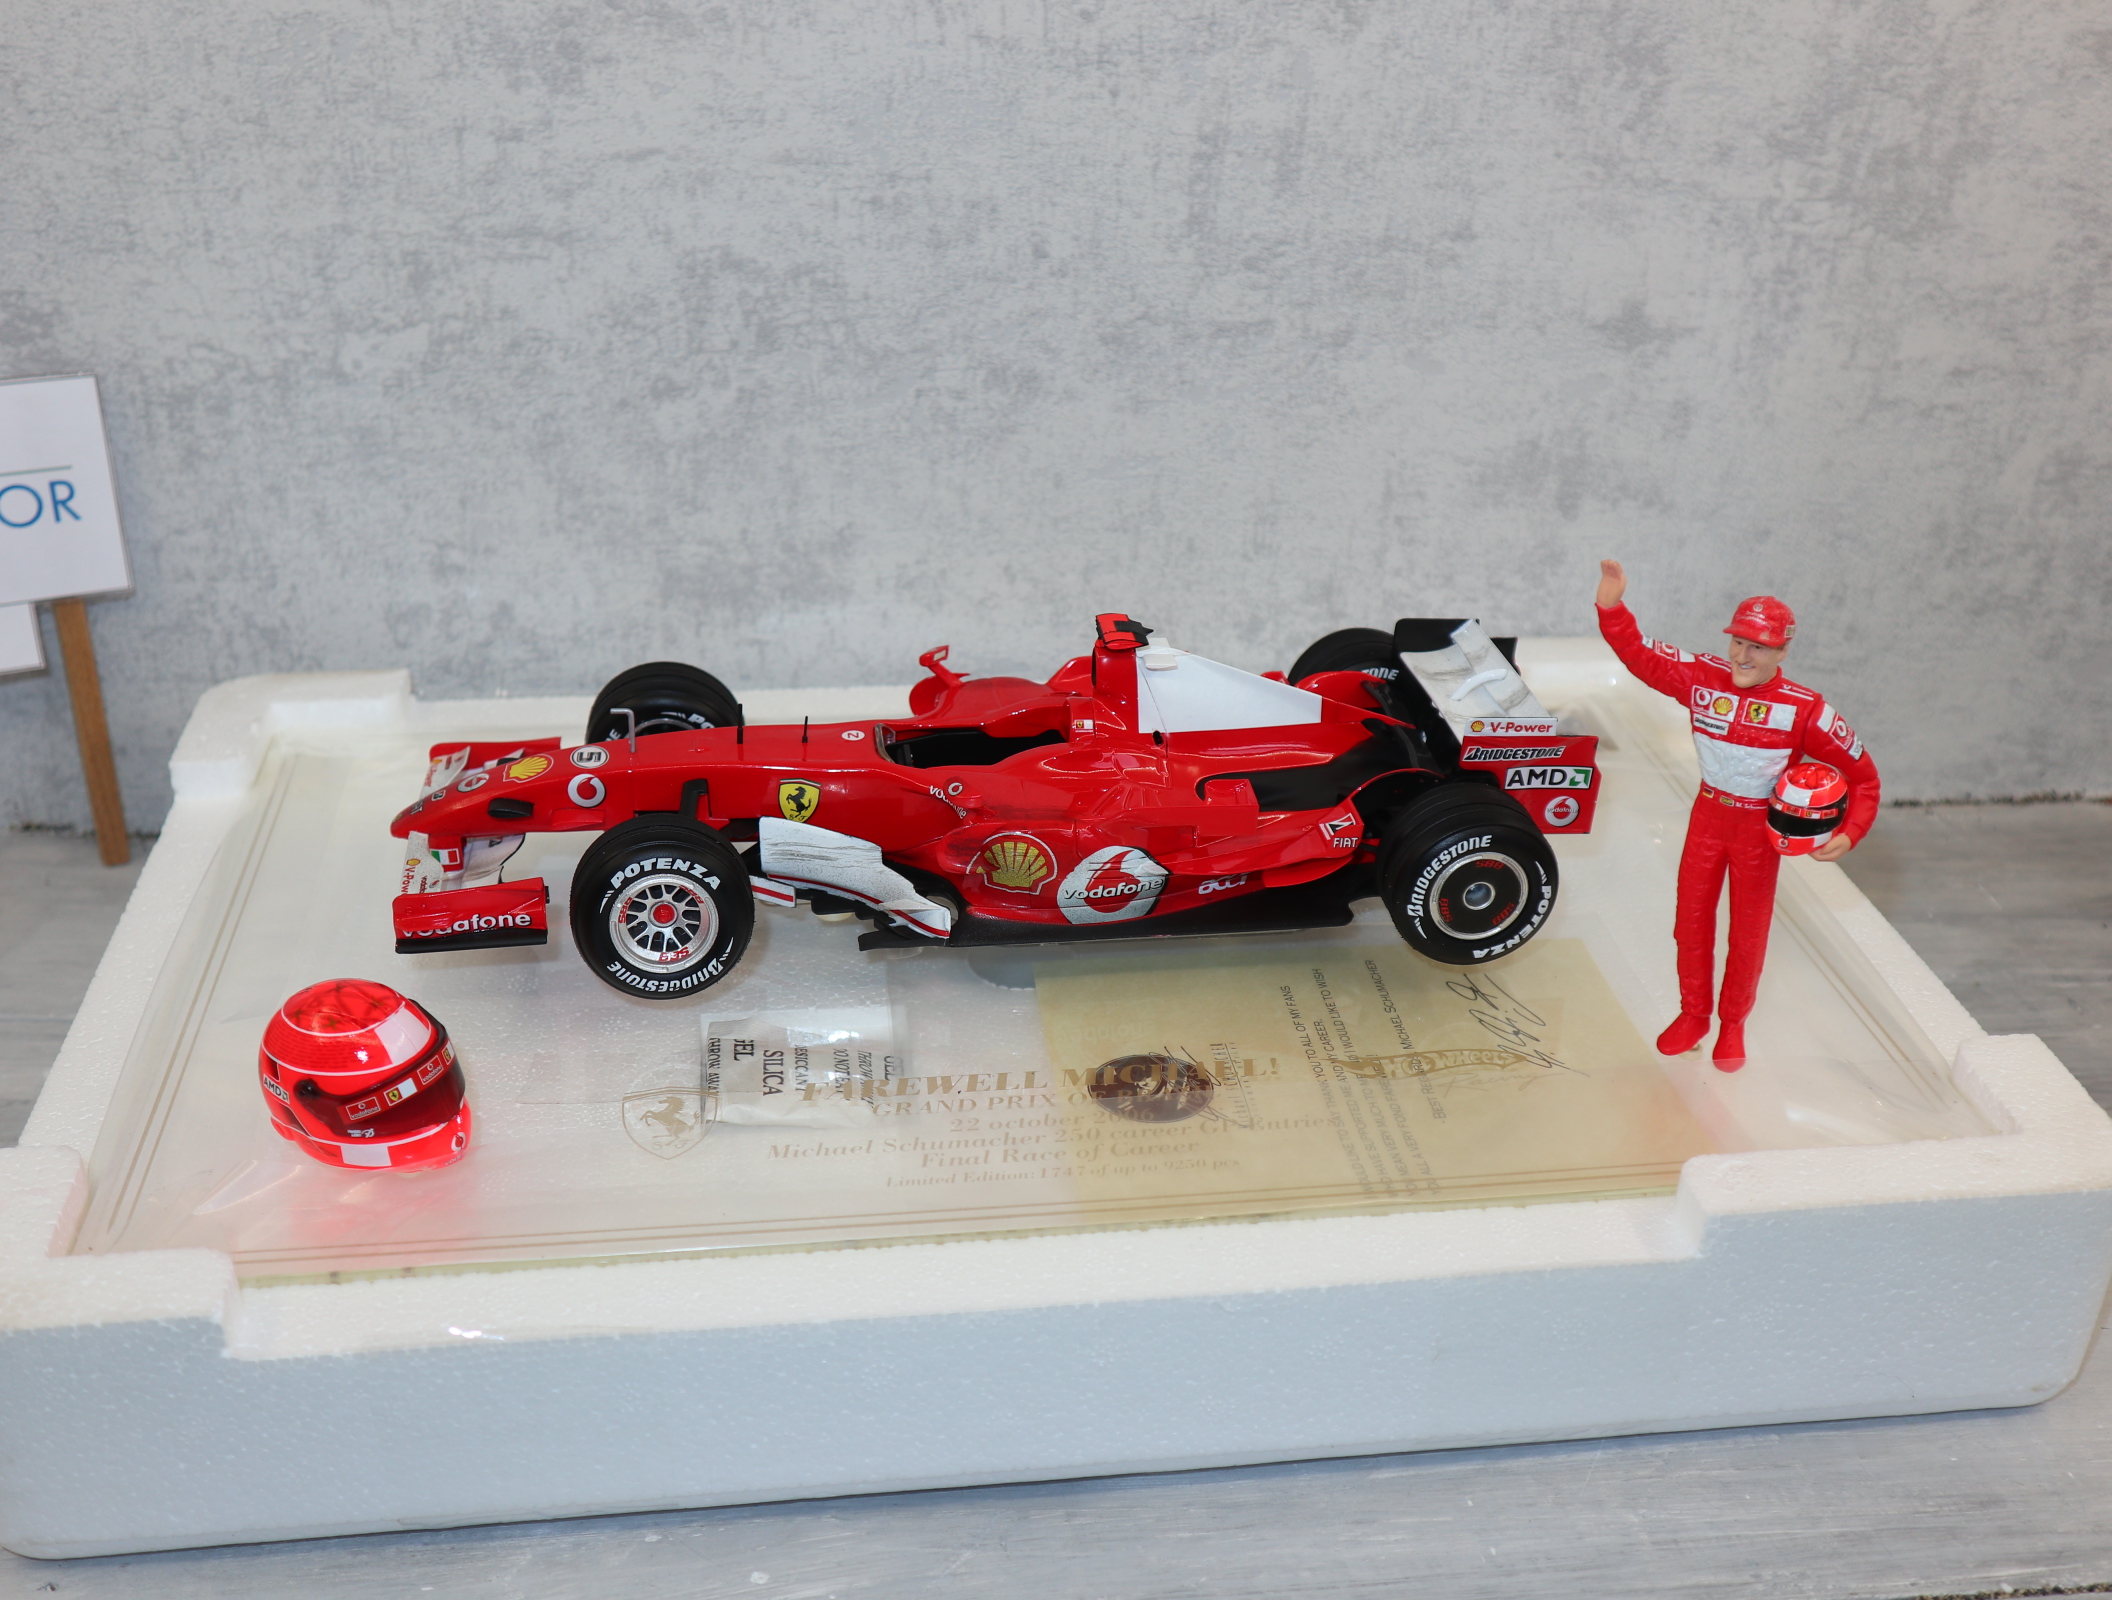 Hot Wheels J2996 1:18 Michael Schumacher Ferrari 248F1 Brasilien 21.10.06 komplett in OVP